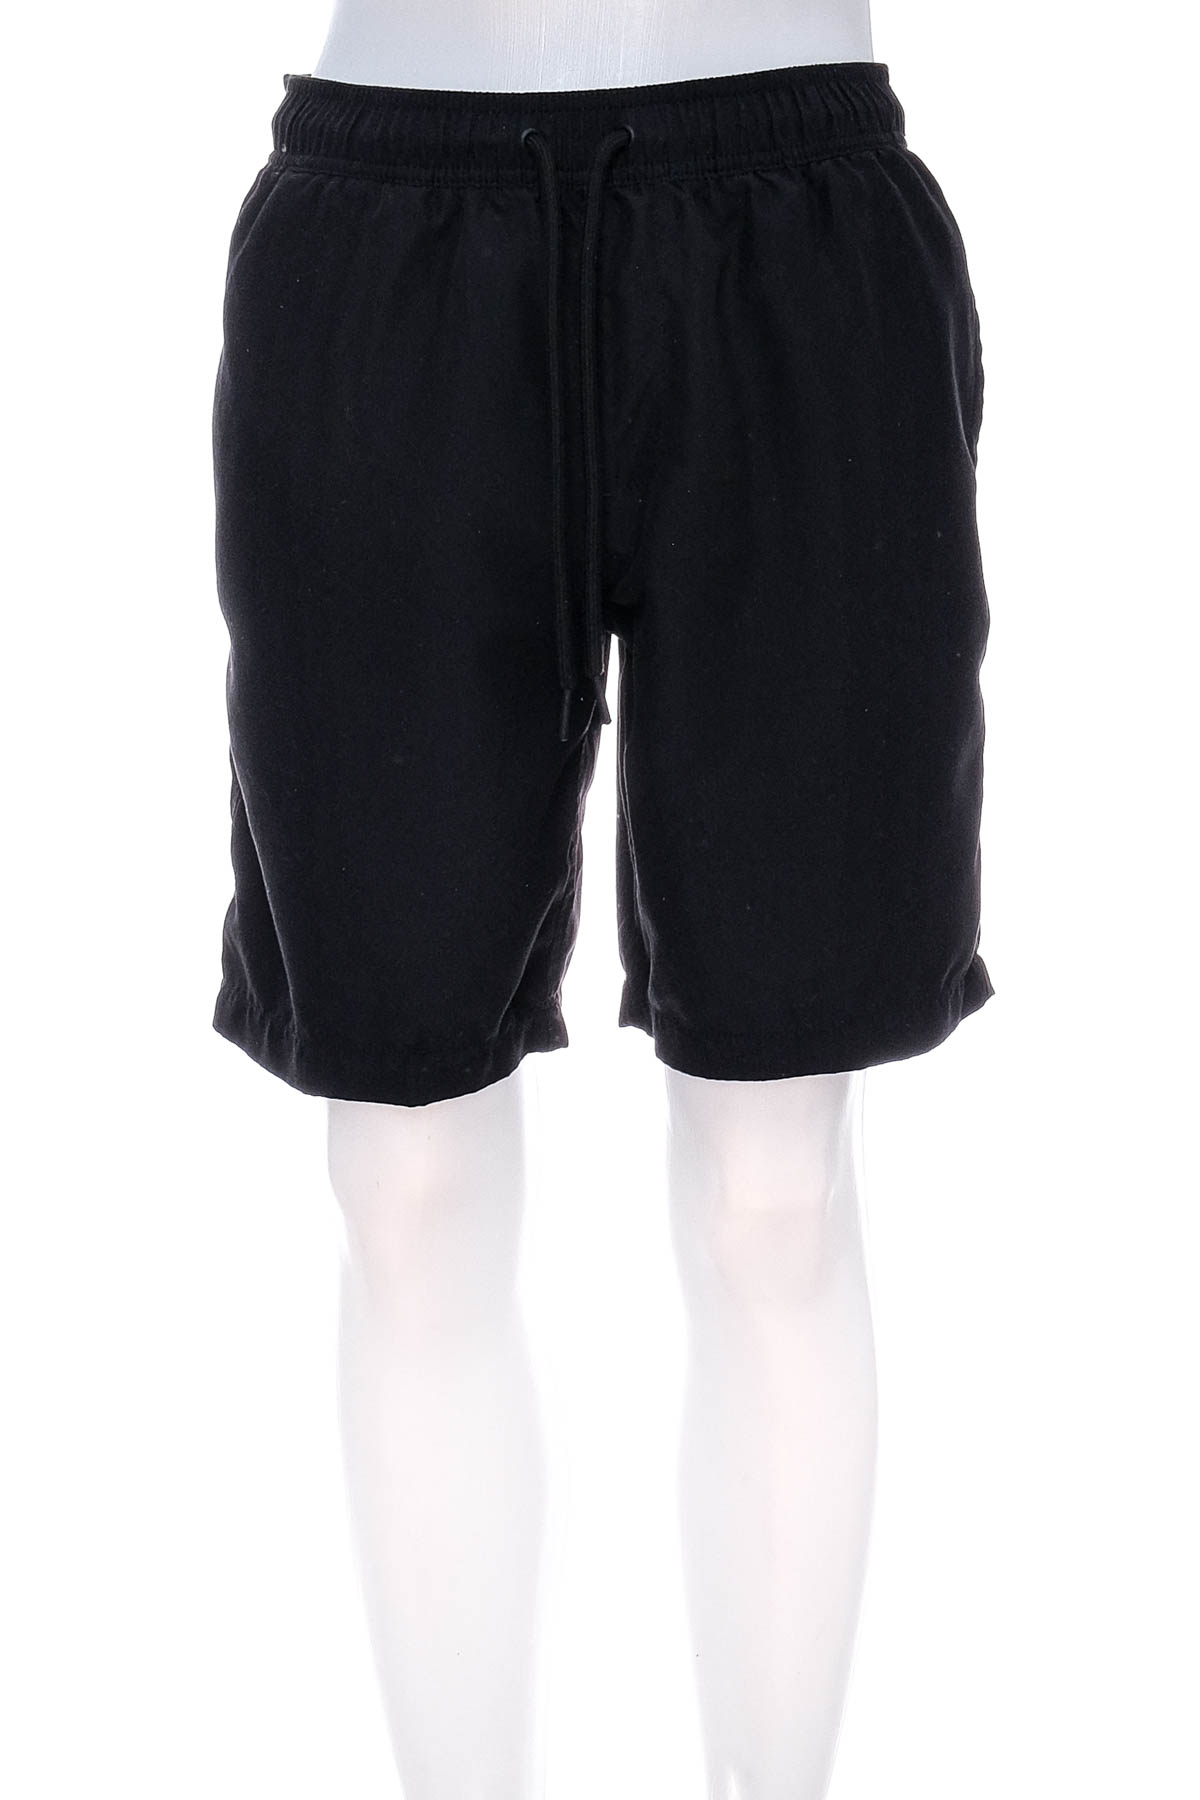 Men's shorts - Amazon essentials - 0